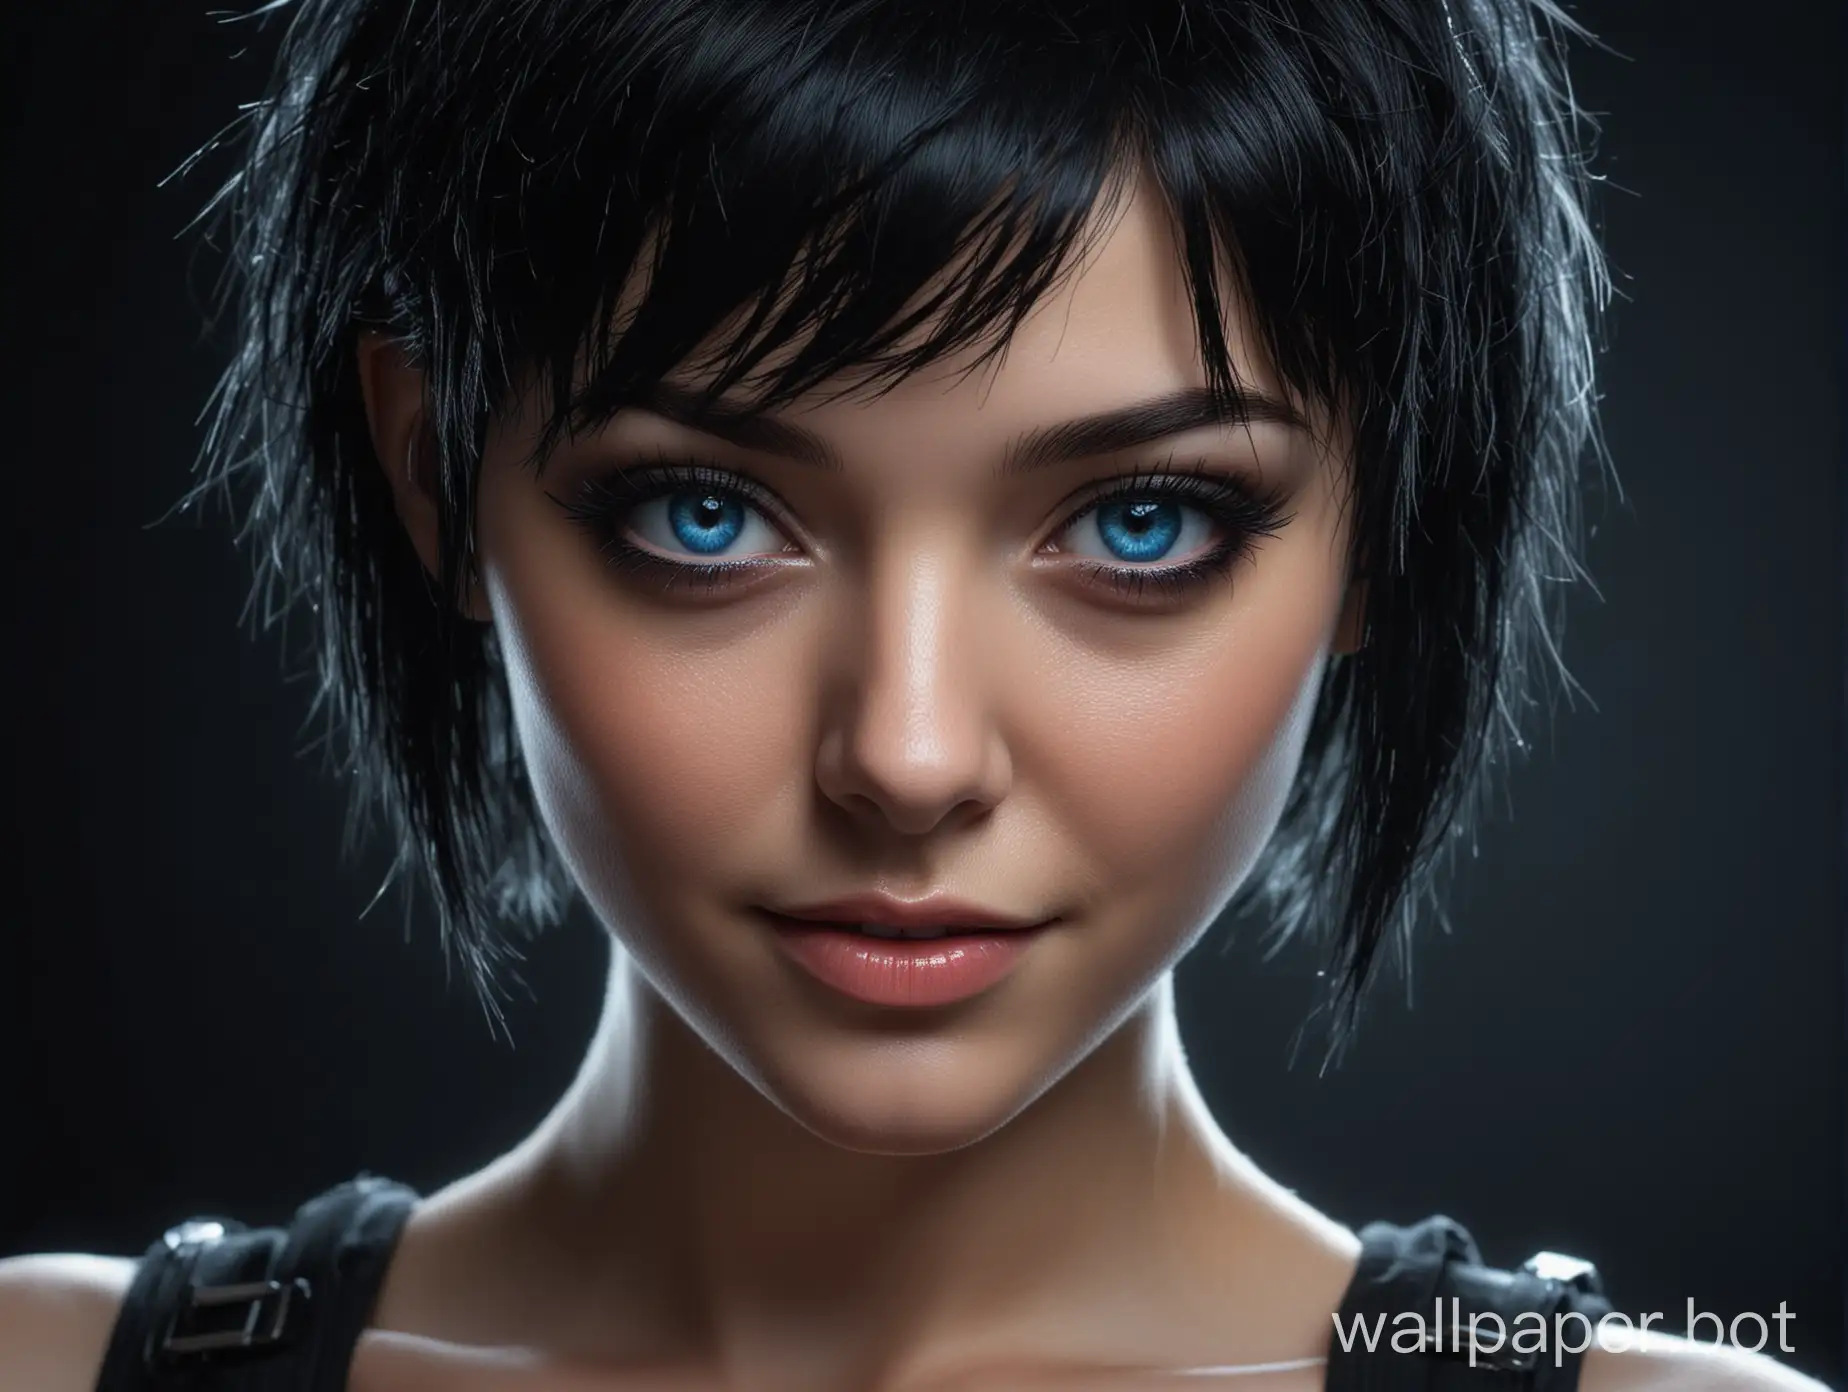 Seductive-Cyberpunk-Portrait-of-Beautiful-Girl-with-Bright-Blue-Eyes